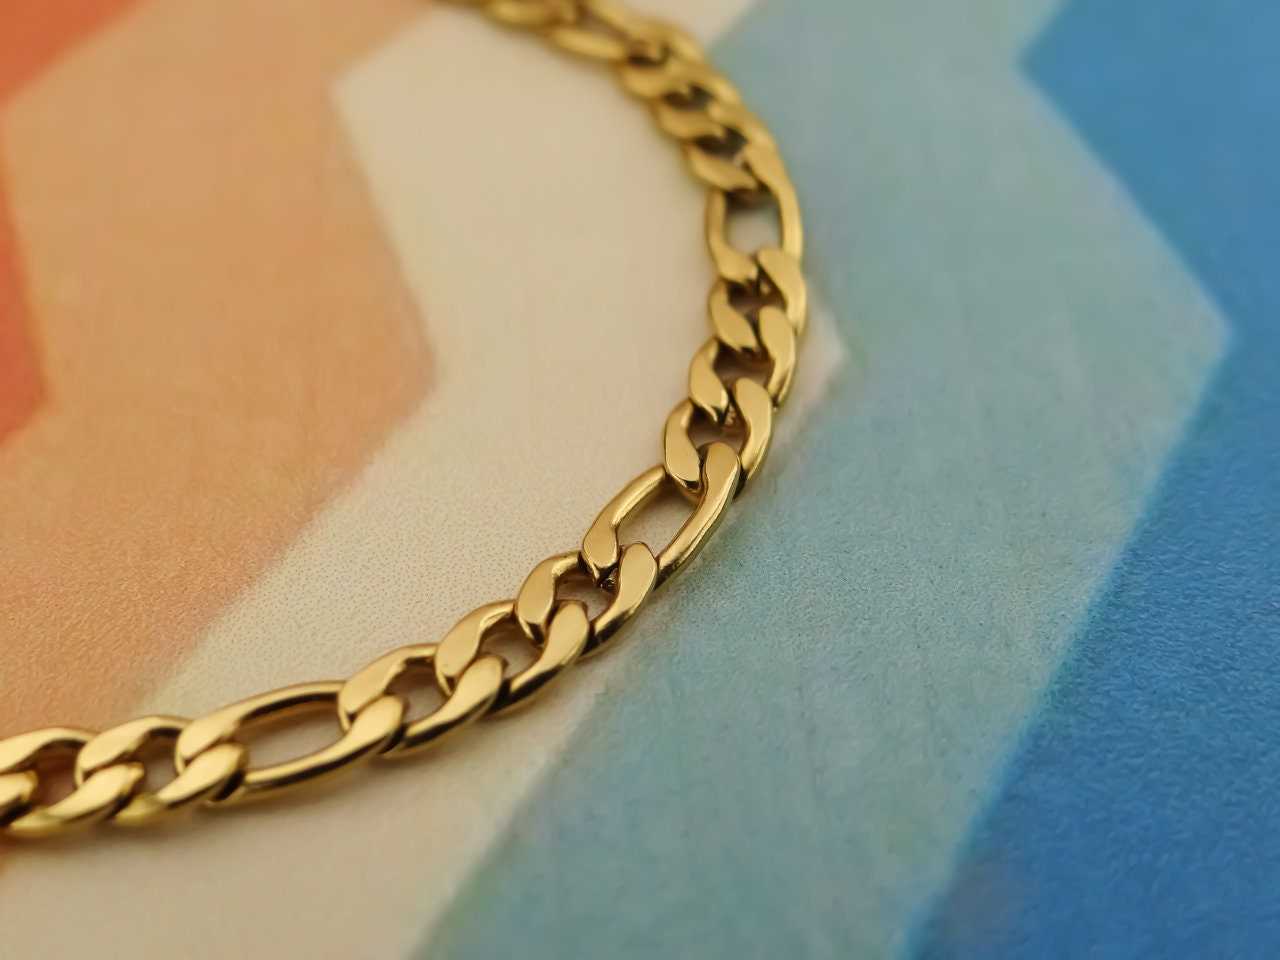 BRACELET with 5mm Figaro Link Chain in Gold - Clasic Bracelet Stylish Gold Bracelets - Bracelets for Women - Chain Bracelet for Men